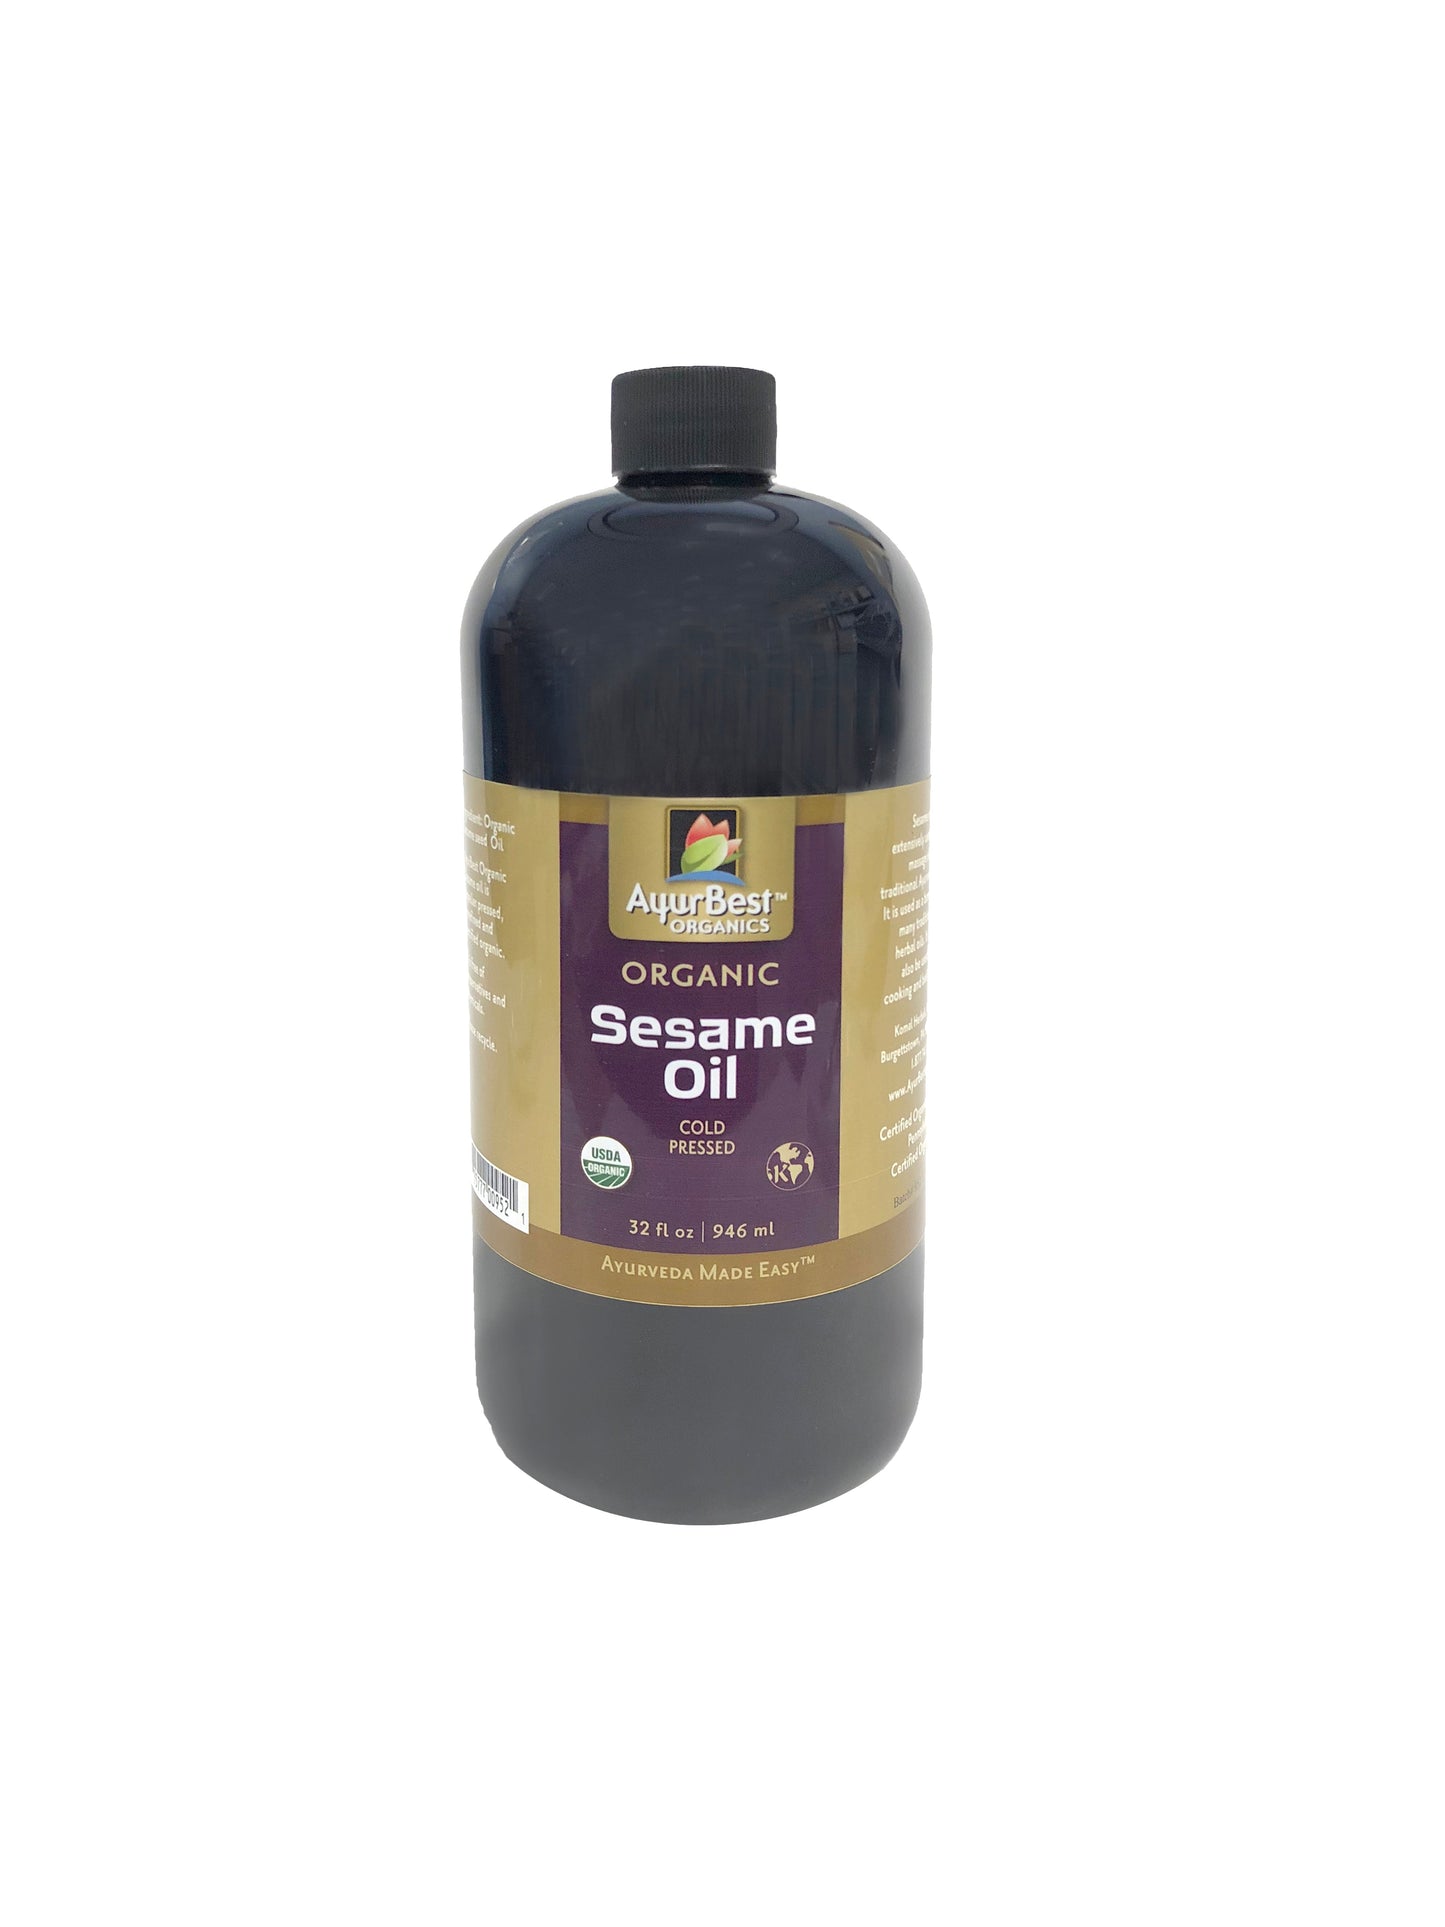 Wholesale Oils - Sesame Oil, Organic